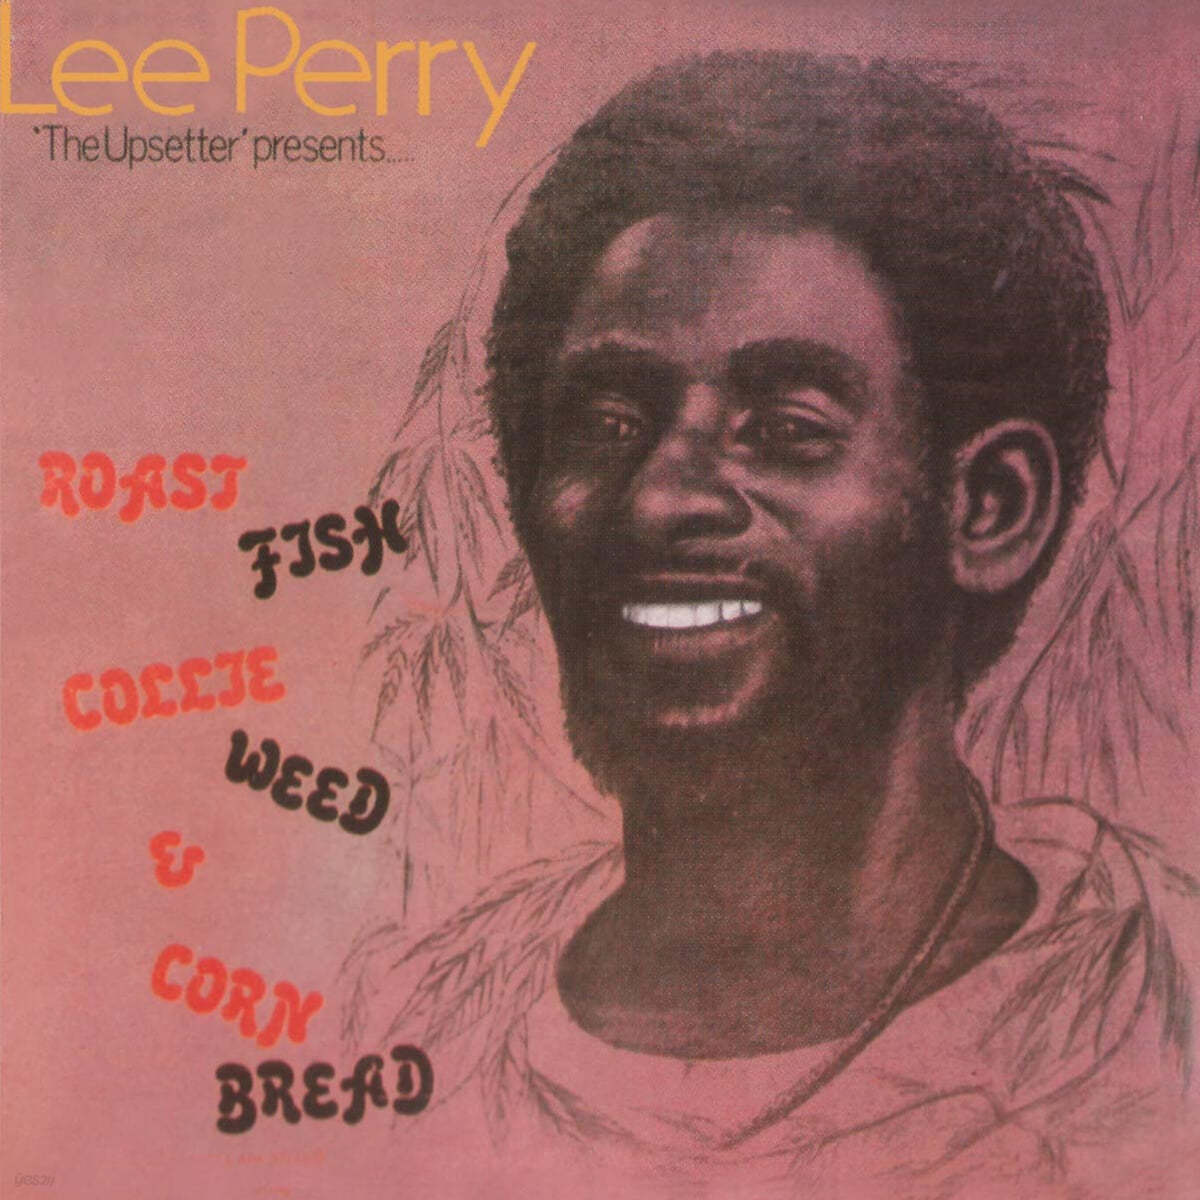 Lee Perry (리 페리) - Roast Fish Collie Weed &amp; Corn Bread [LP] 